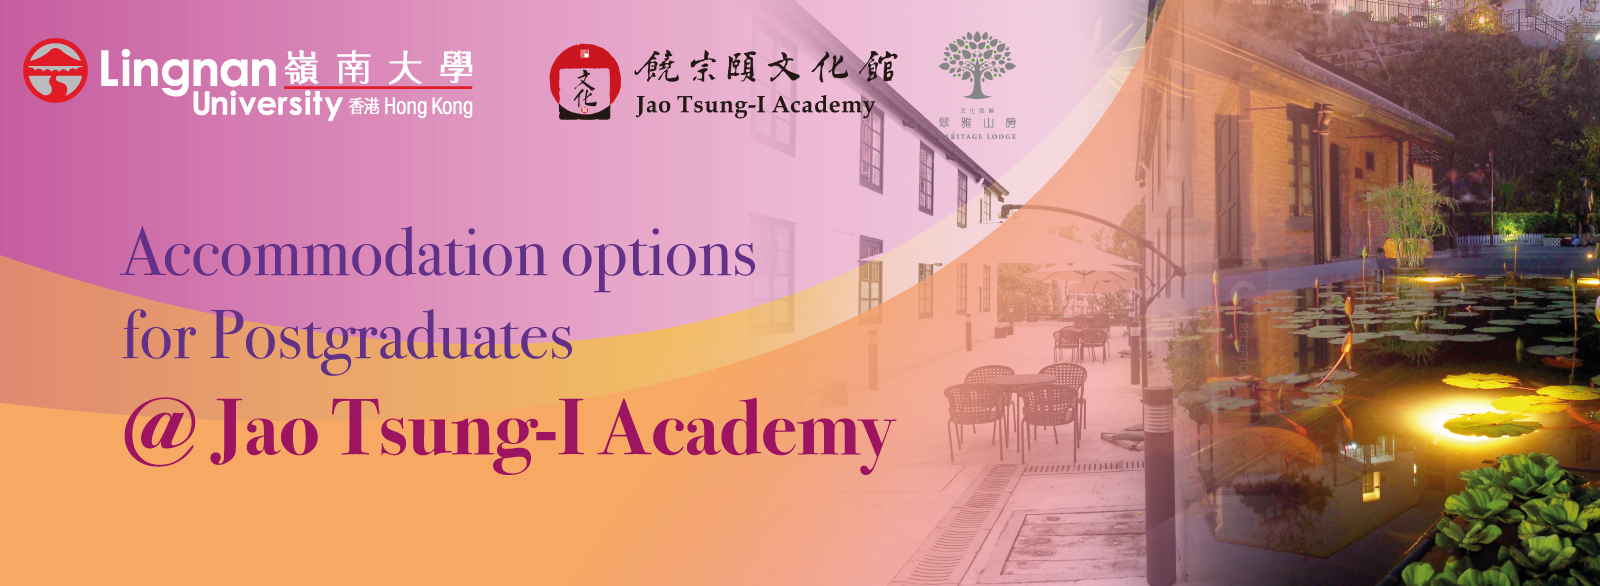 Accommodation options for Postgraduates @ Jao Tsung-I Academy